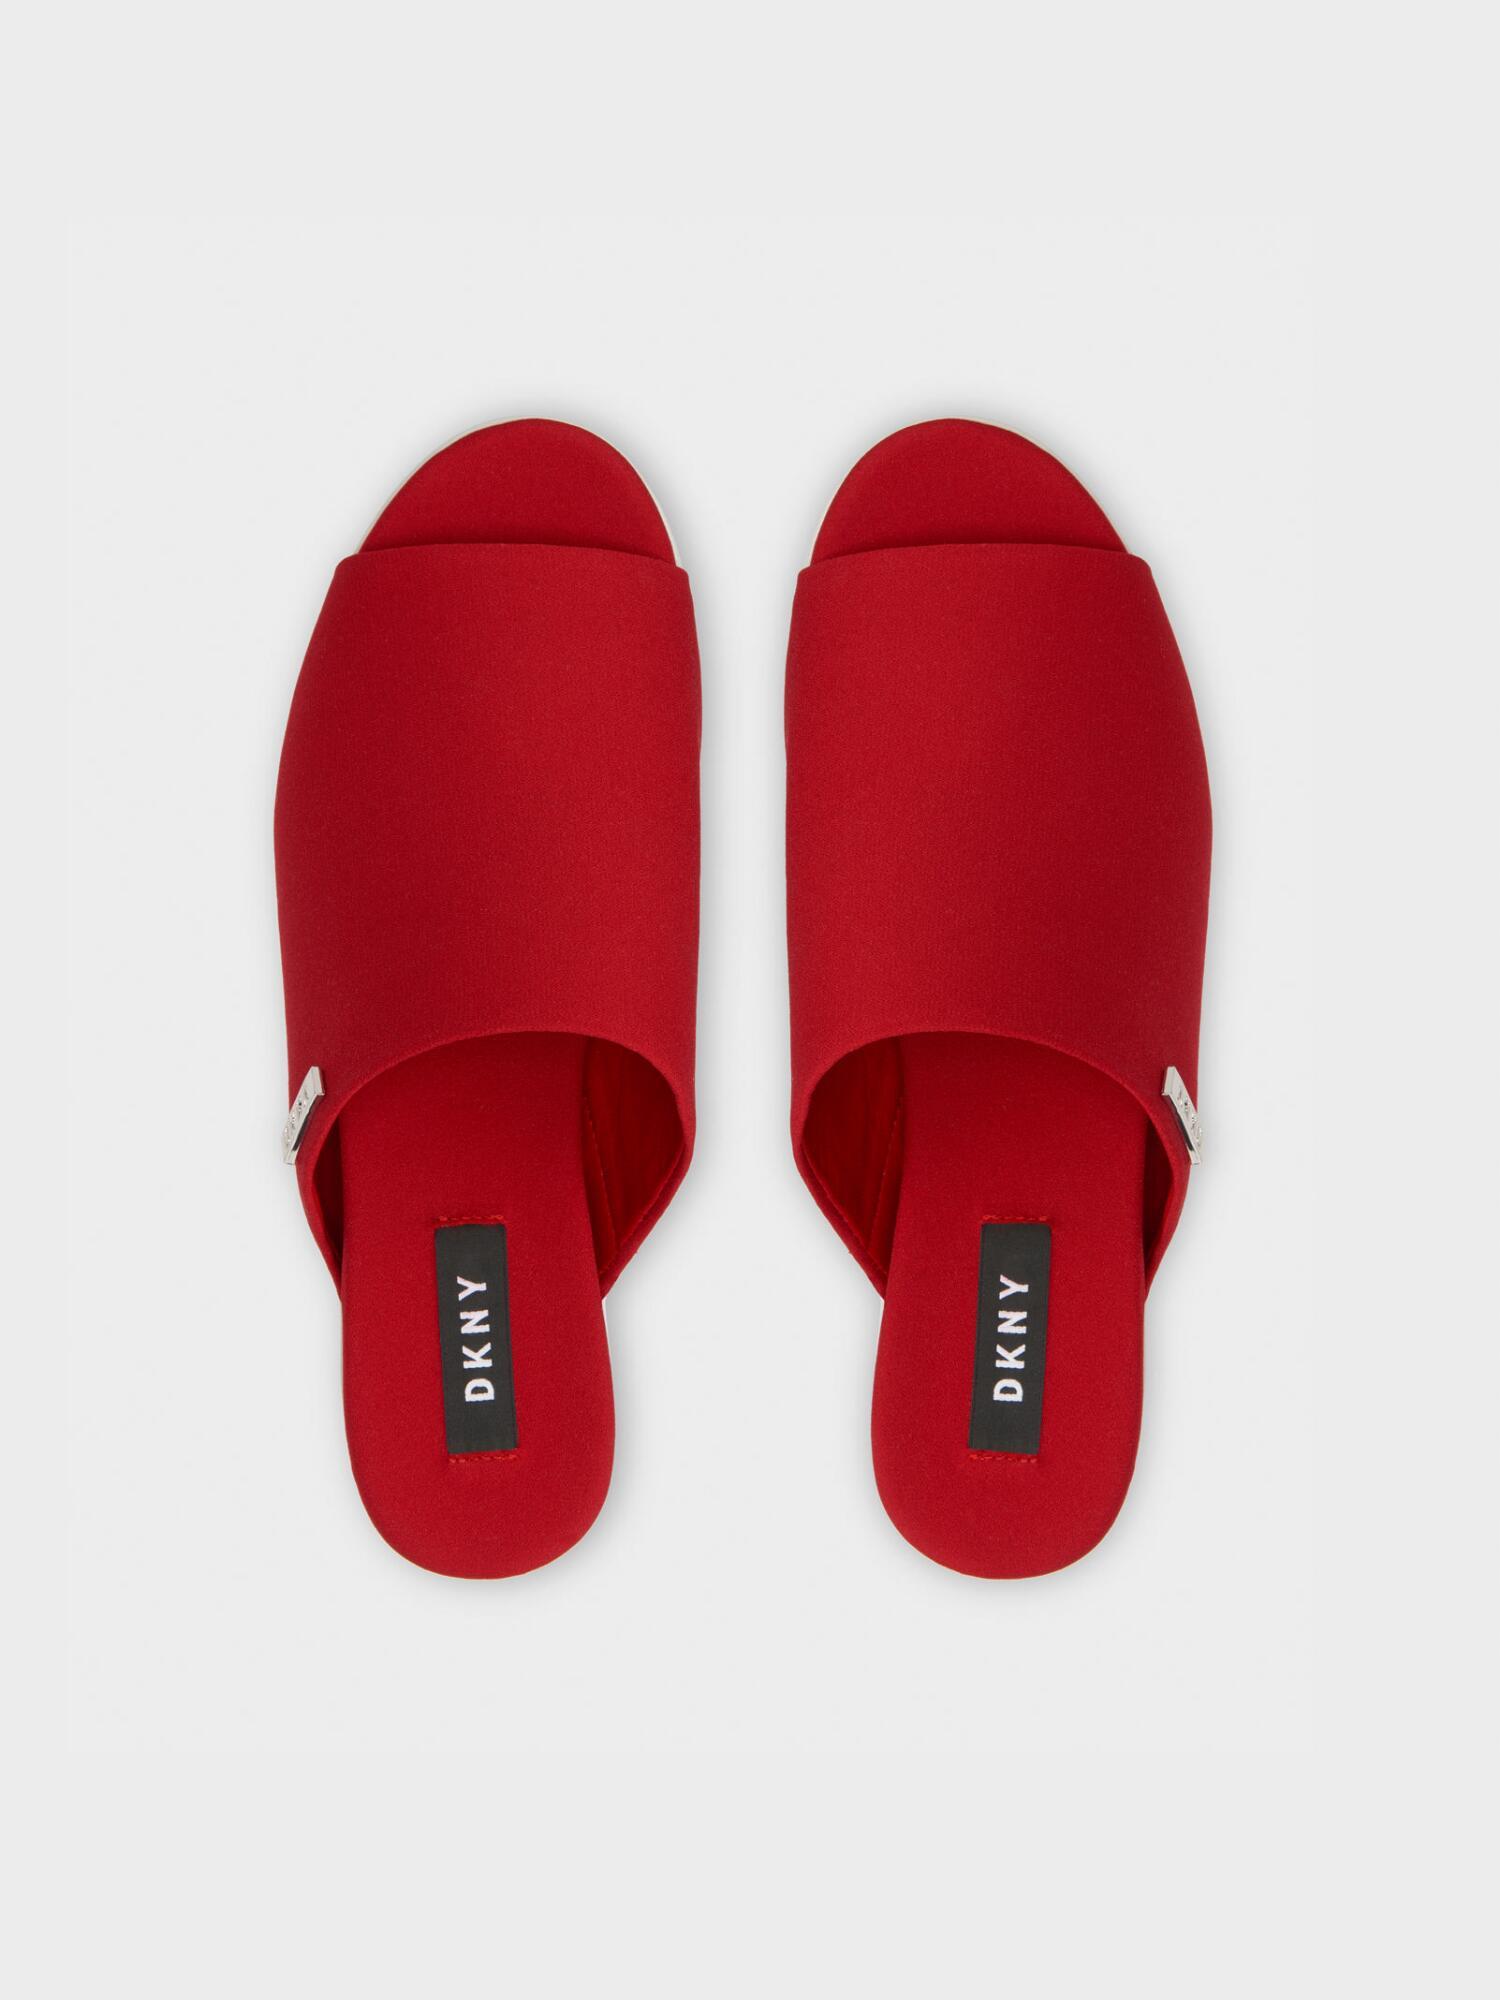 Dkny Carli Platform Sandals Best Sale, 50% OFF | www.bridgepartnersllc.com